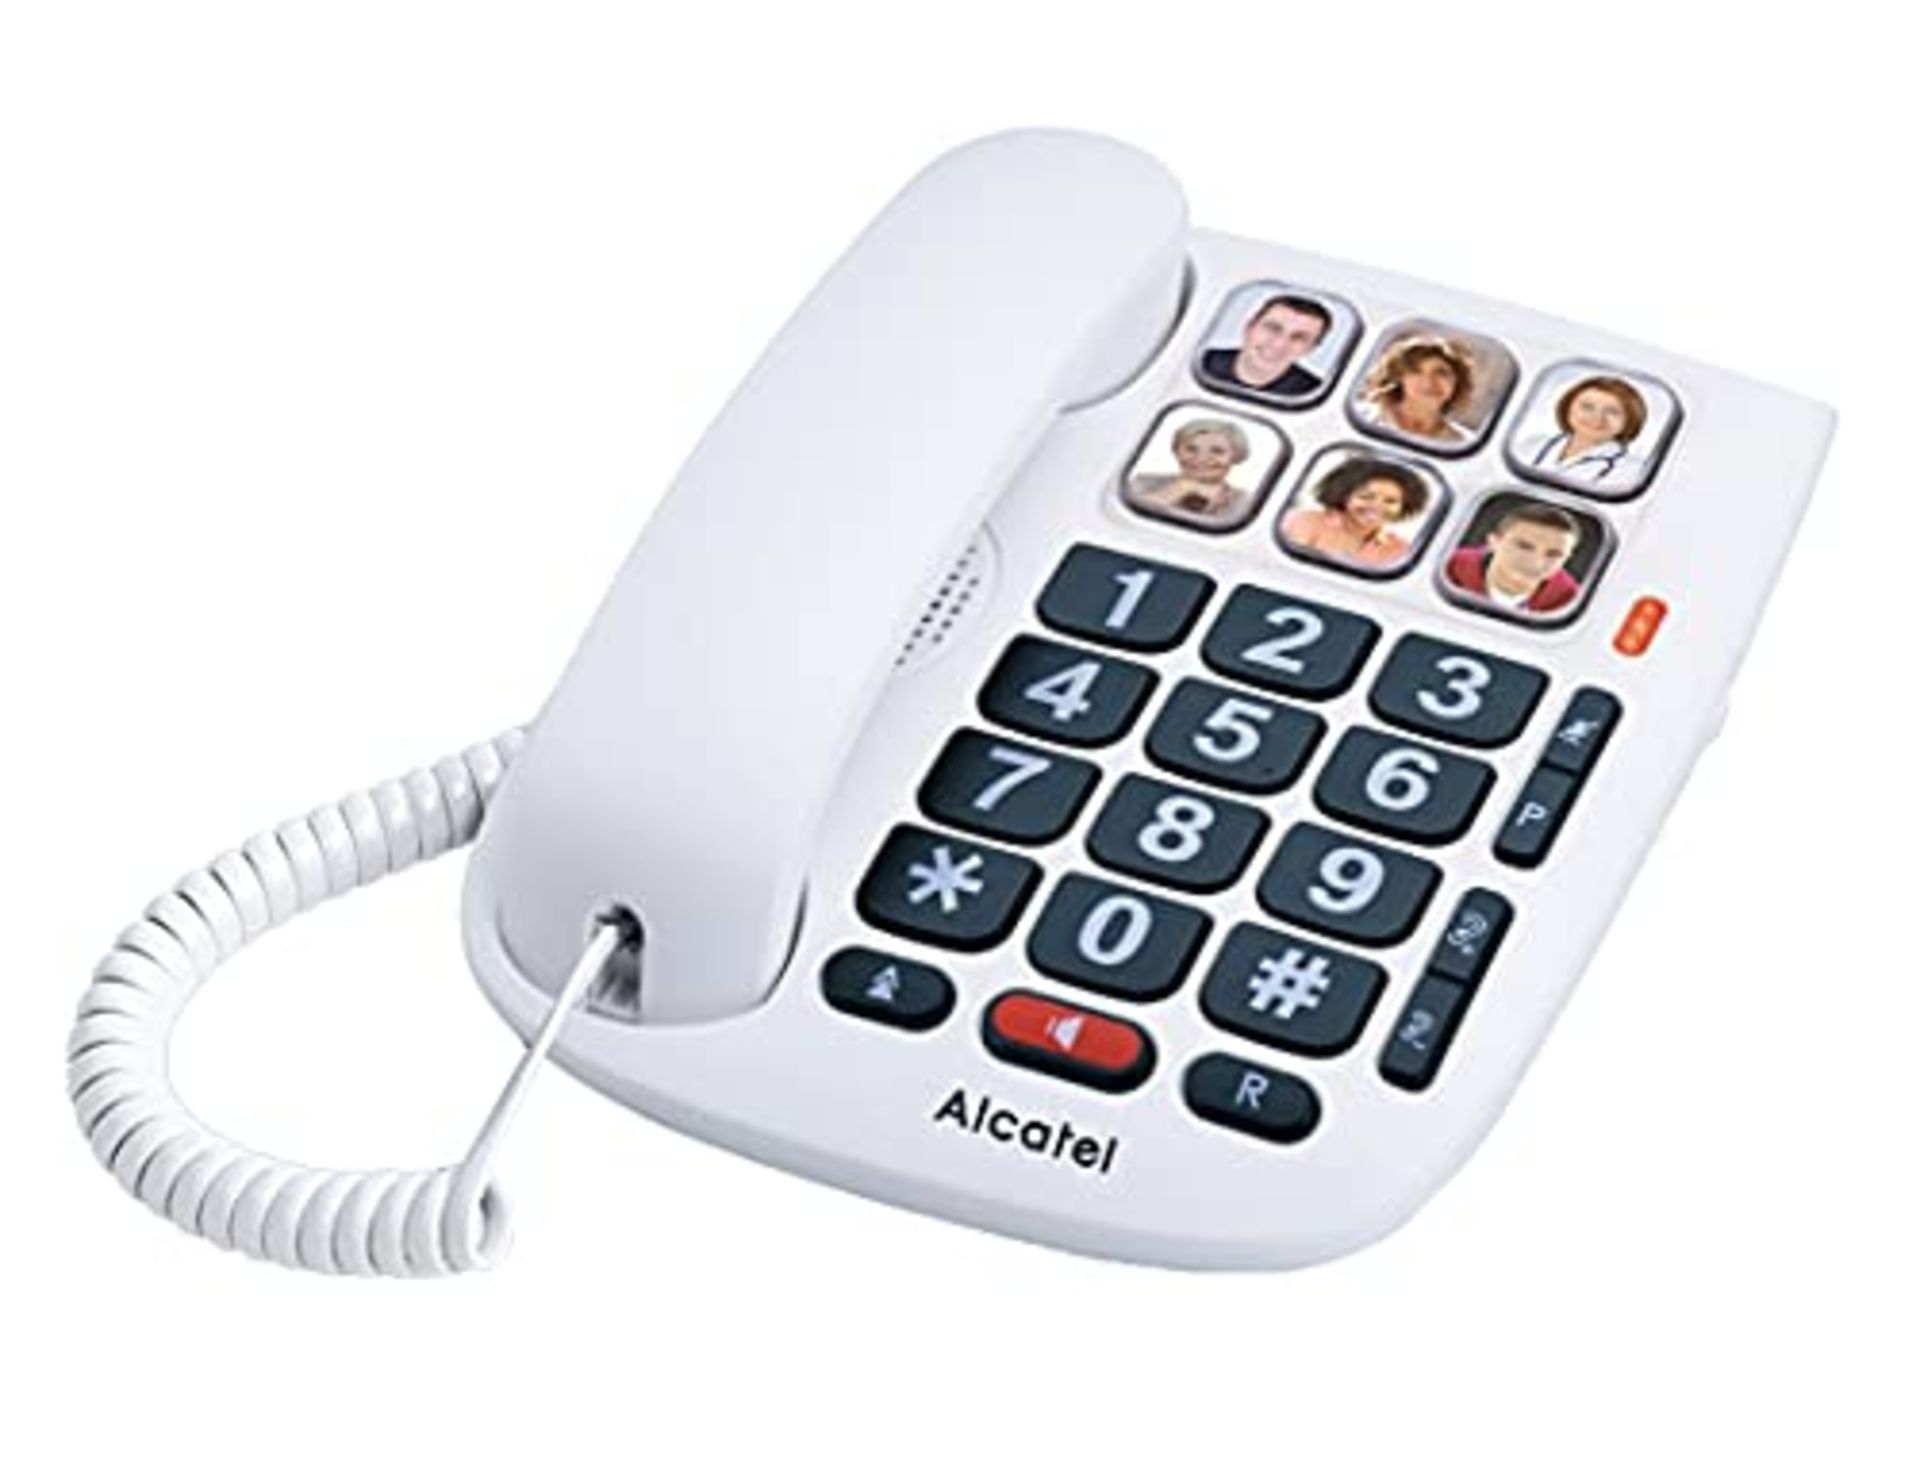 Alcatel Max 10 Corded Phone for Seniors White.